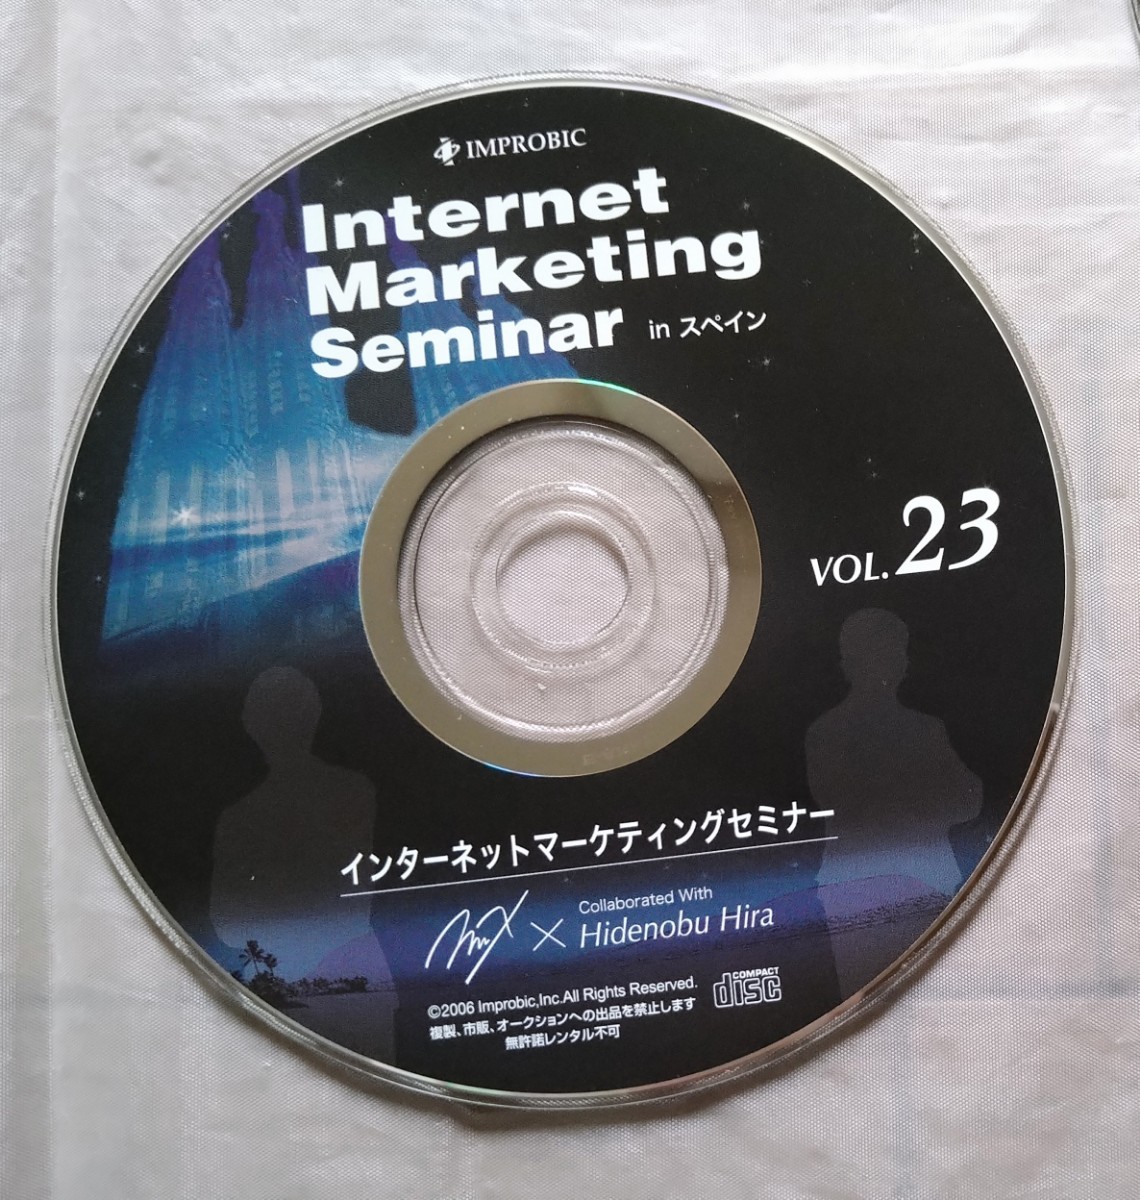 Mr.X 暗黒マーケティング CD 39枚セット スペイン アラスカ 平秀信 コピーライティング マーケティング_画像5